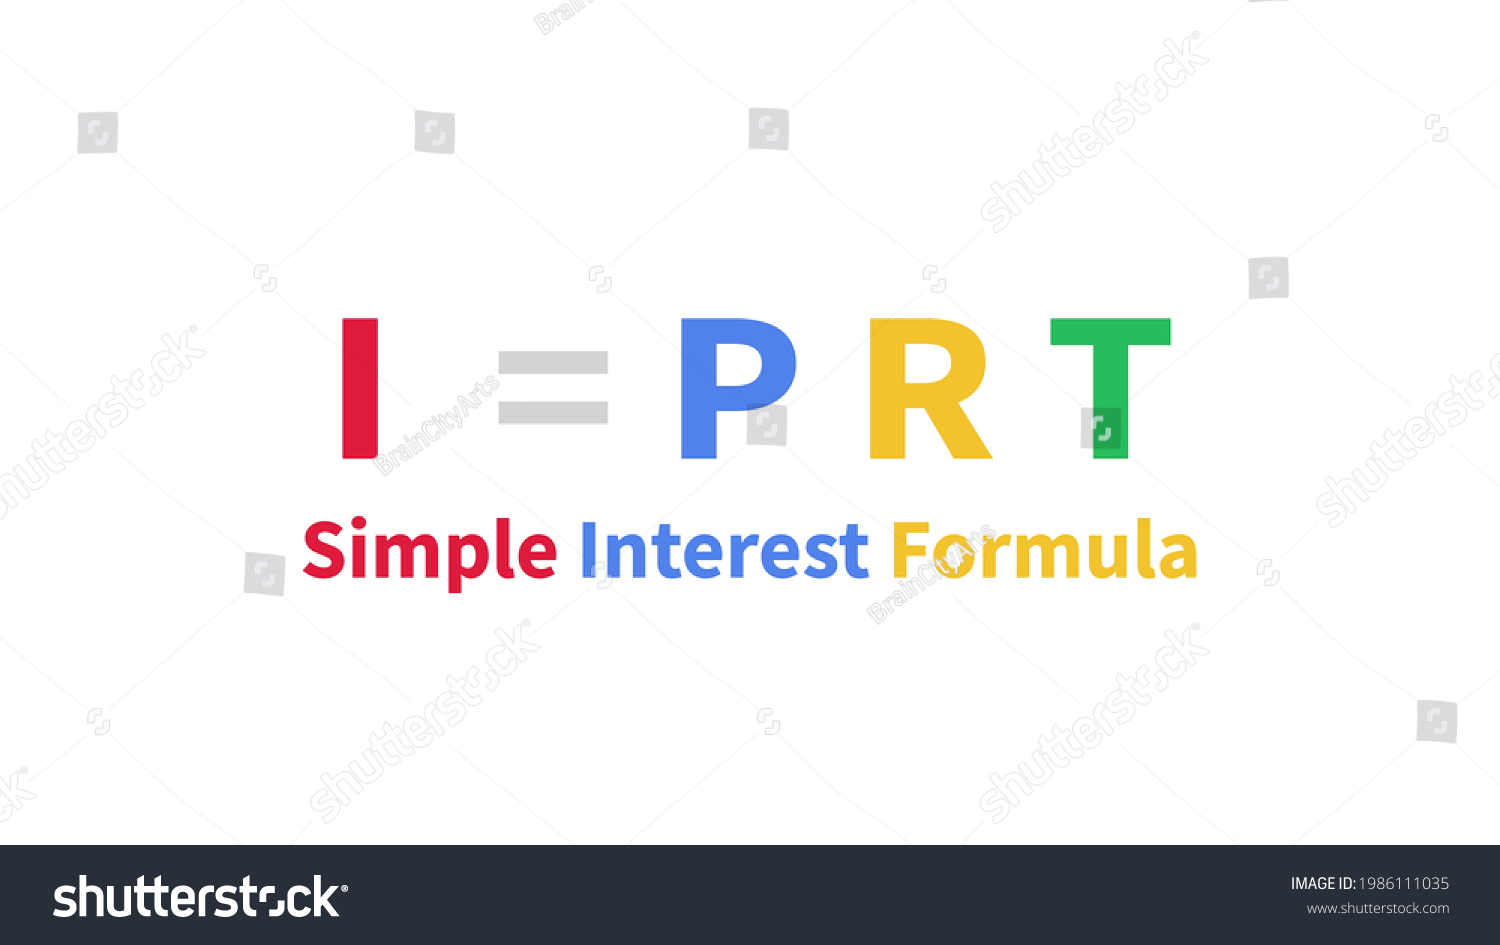 Interest formula simple Simple Interest